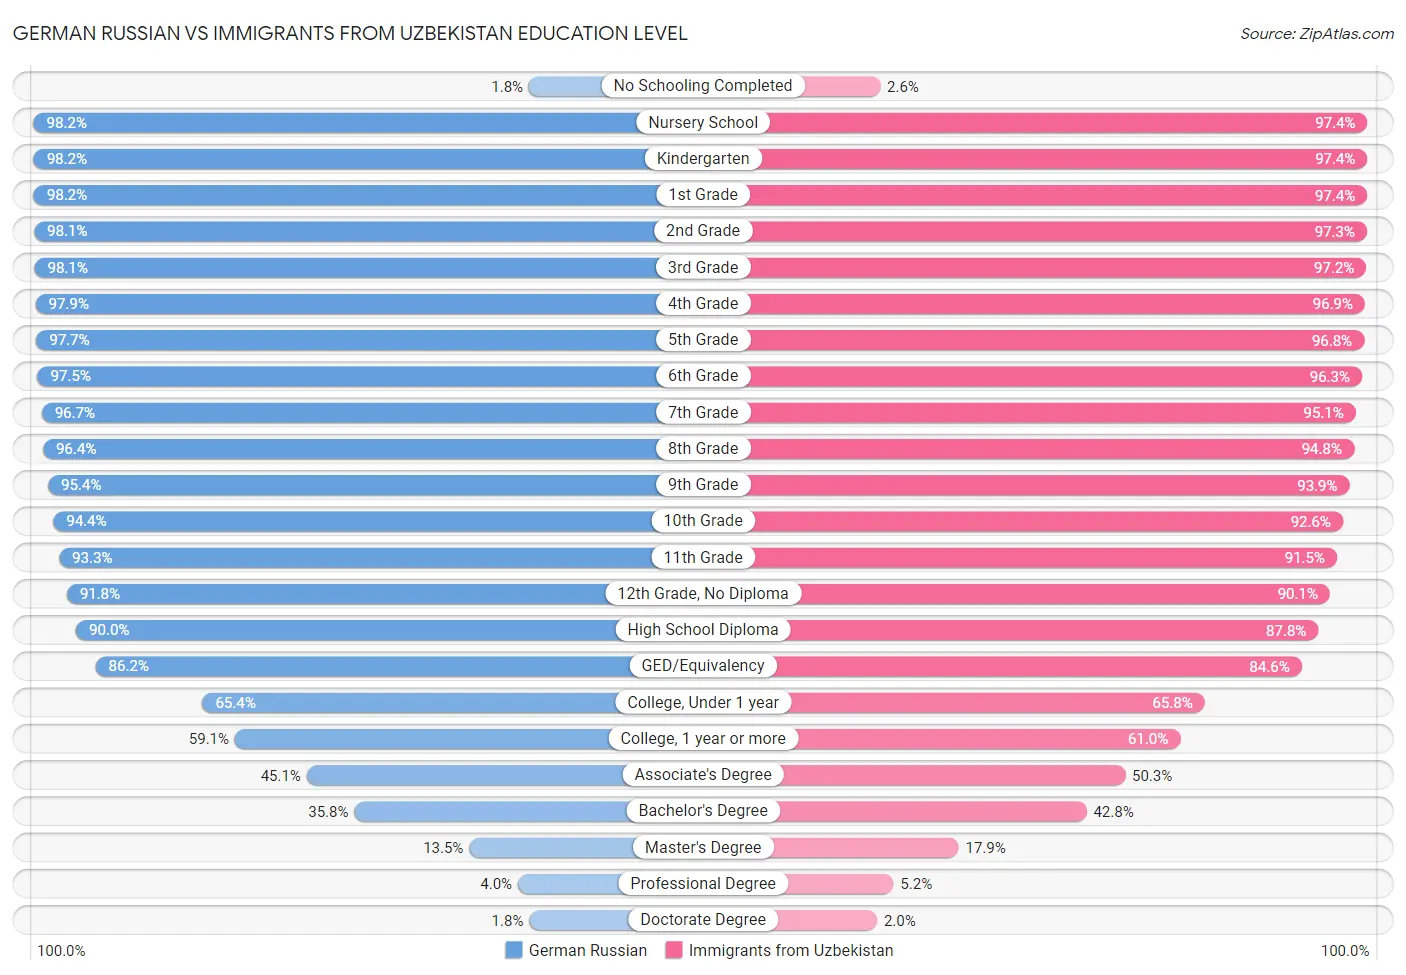 German Russian vs Immigrants from Uzbekistan Education Level